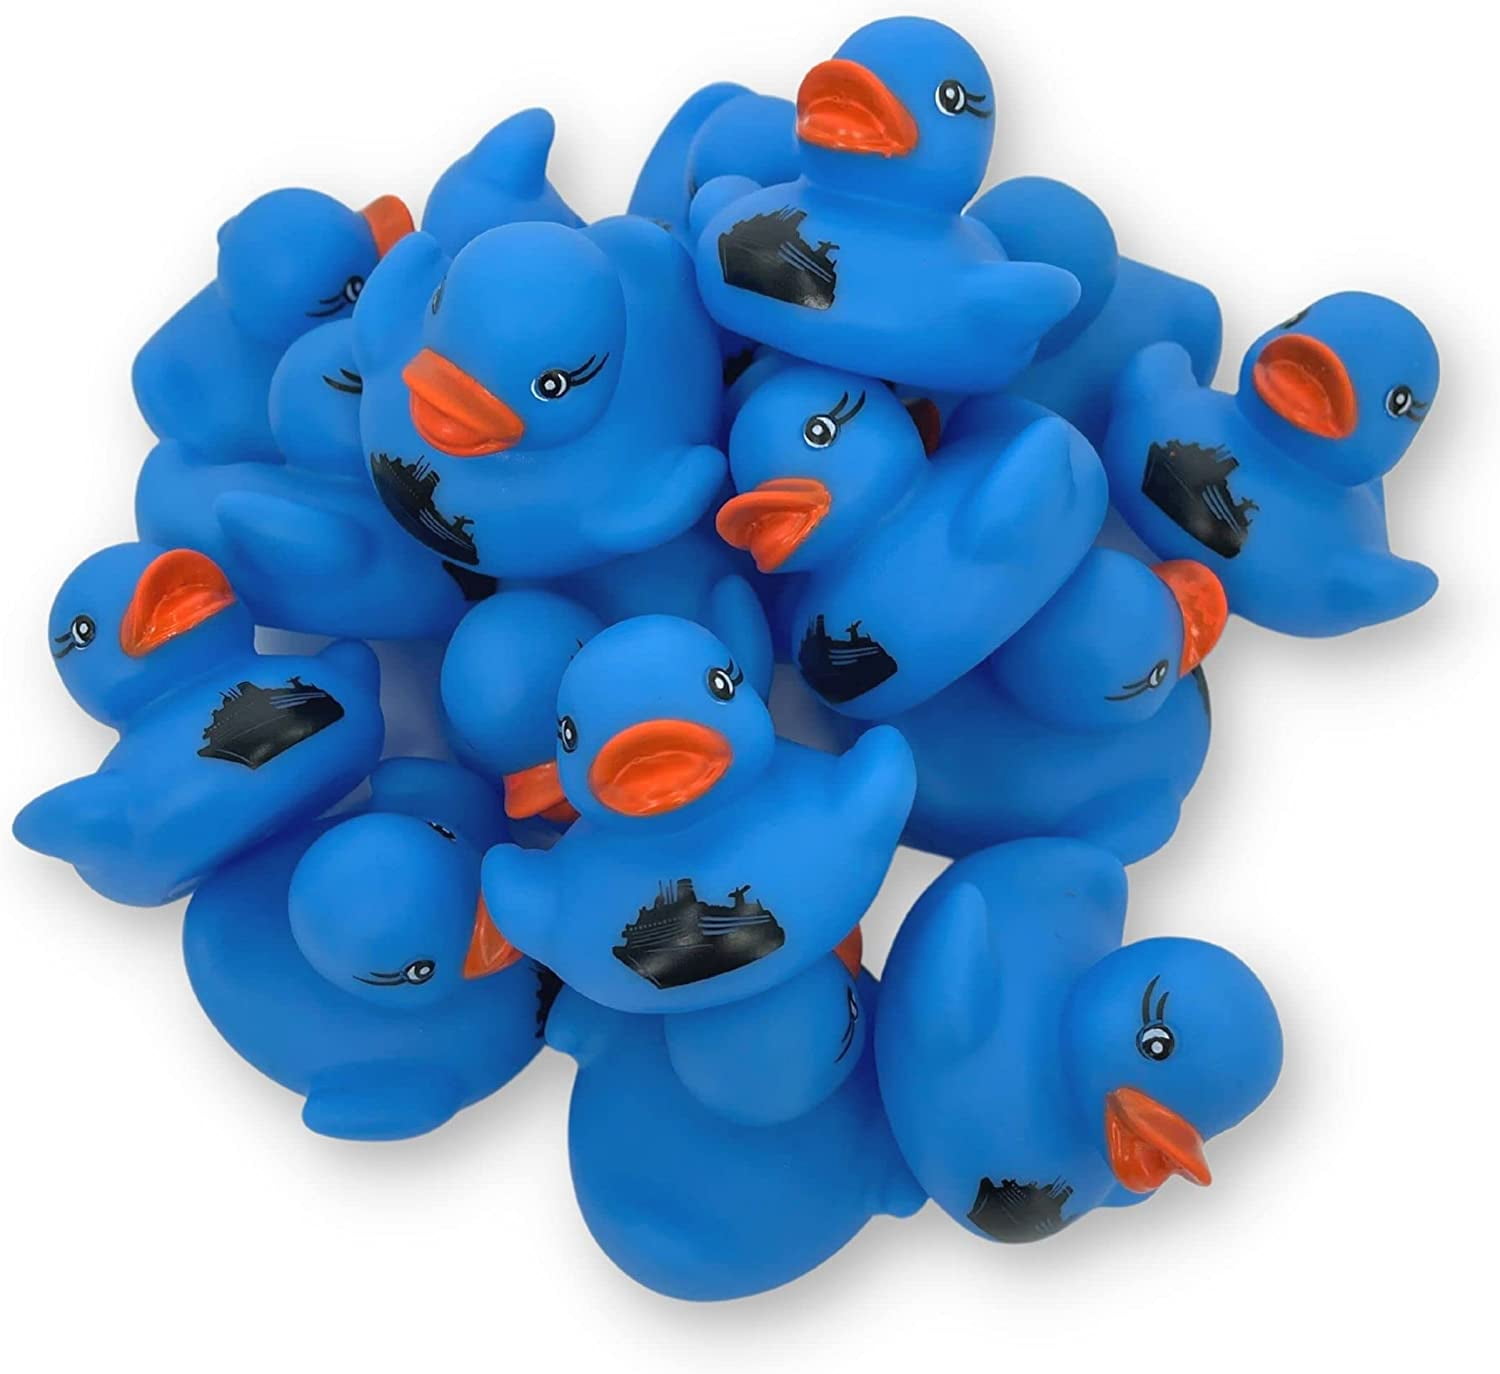 Classic Rubber Ducks - Item 028341 - Toys at Bulk Toy Store .com